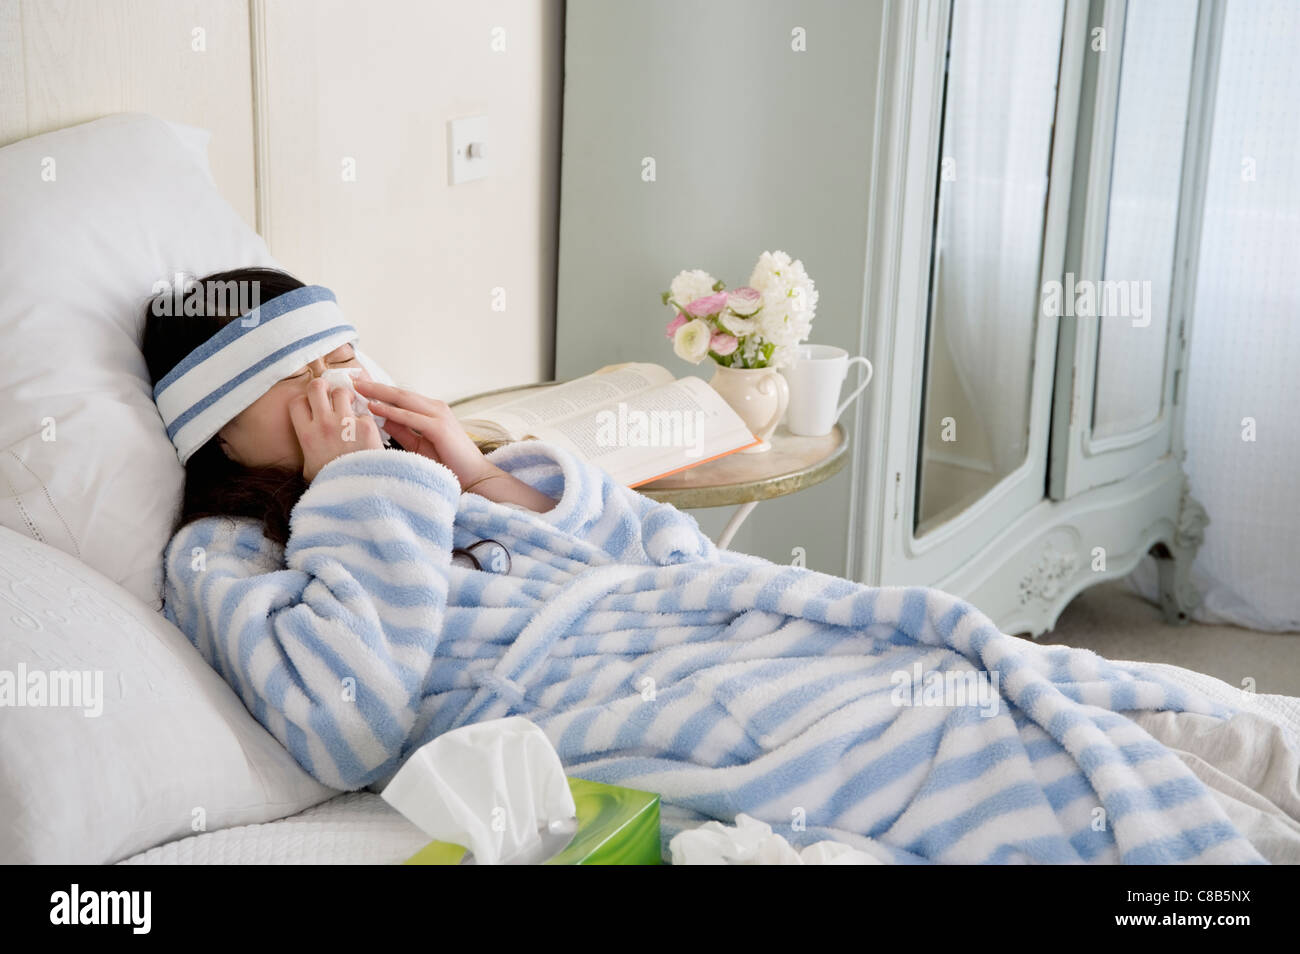 Junge Frau krank im Bett Stockfotografie - Alamy